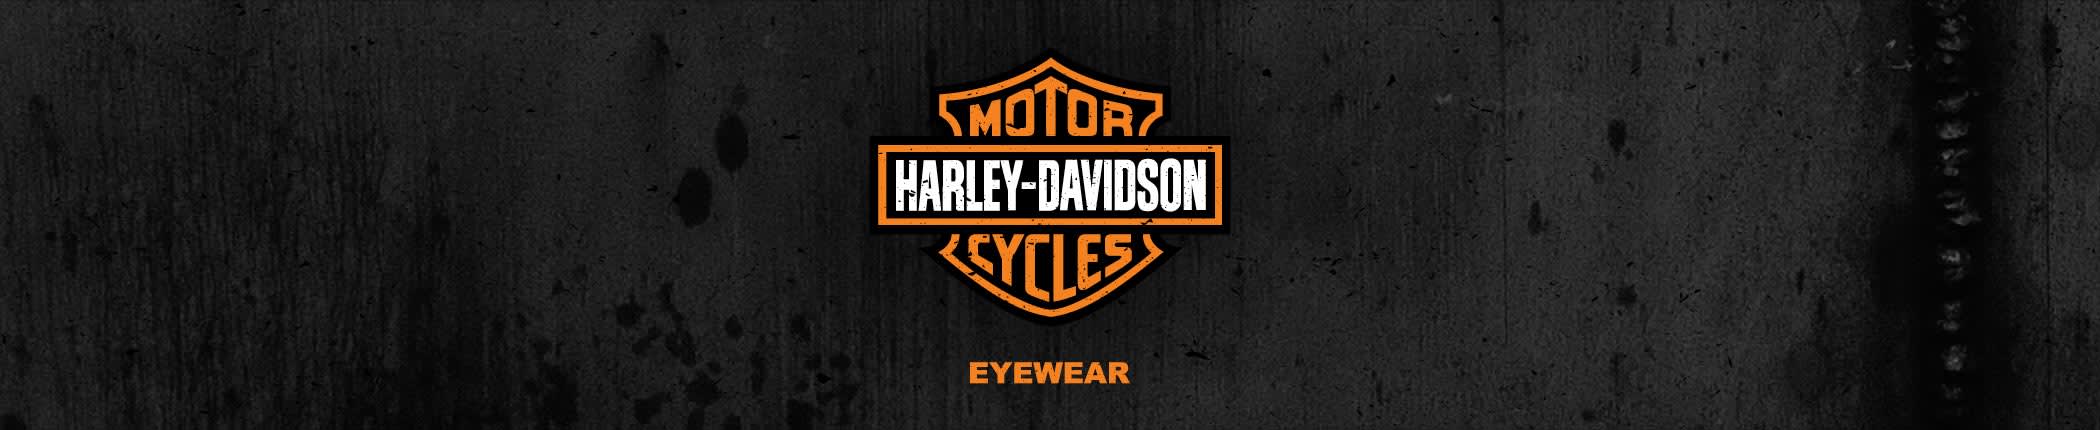 Shop Harley-Davidson Eyeglasses & Sunglasses